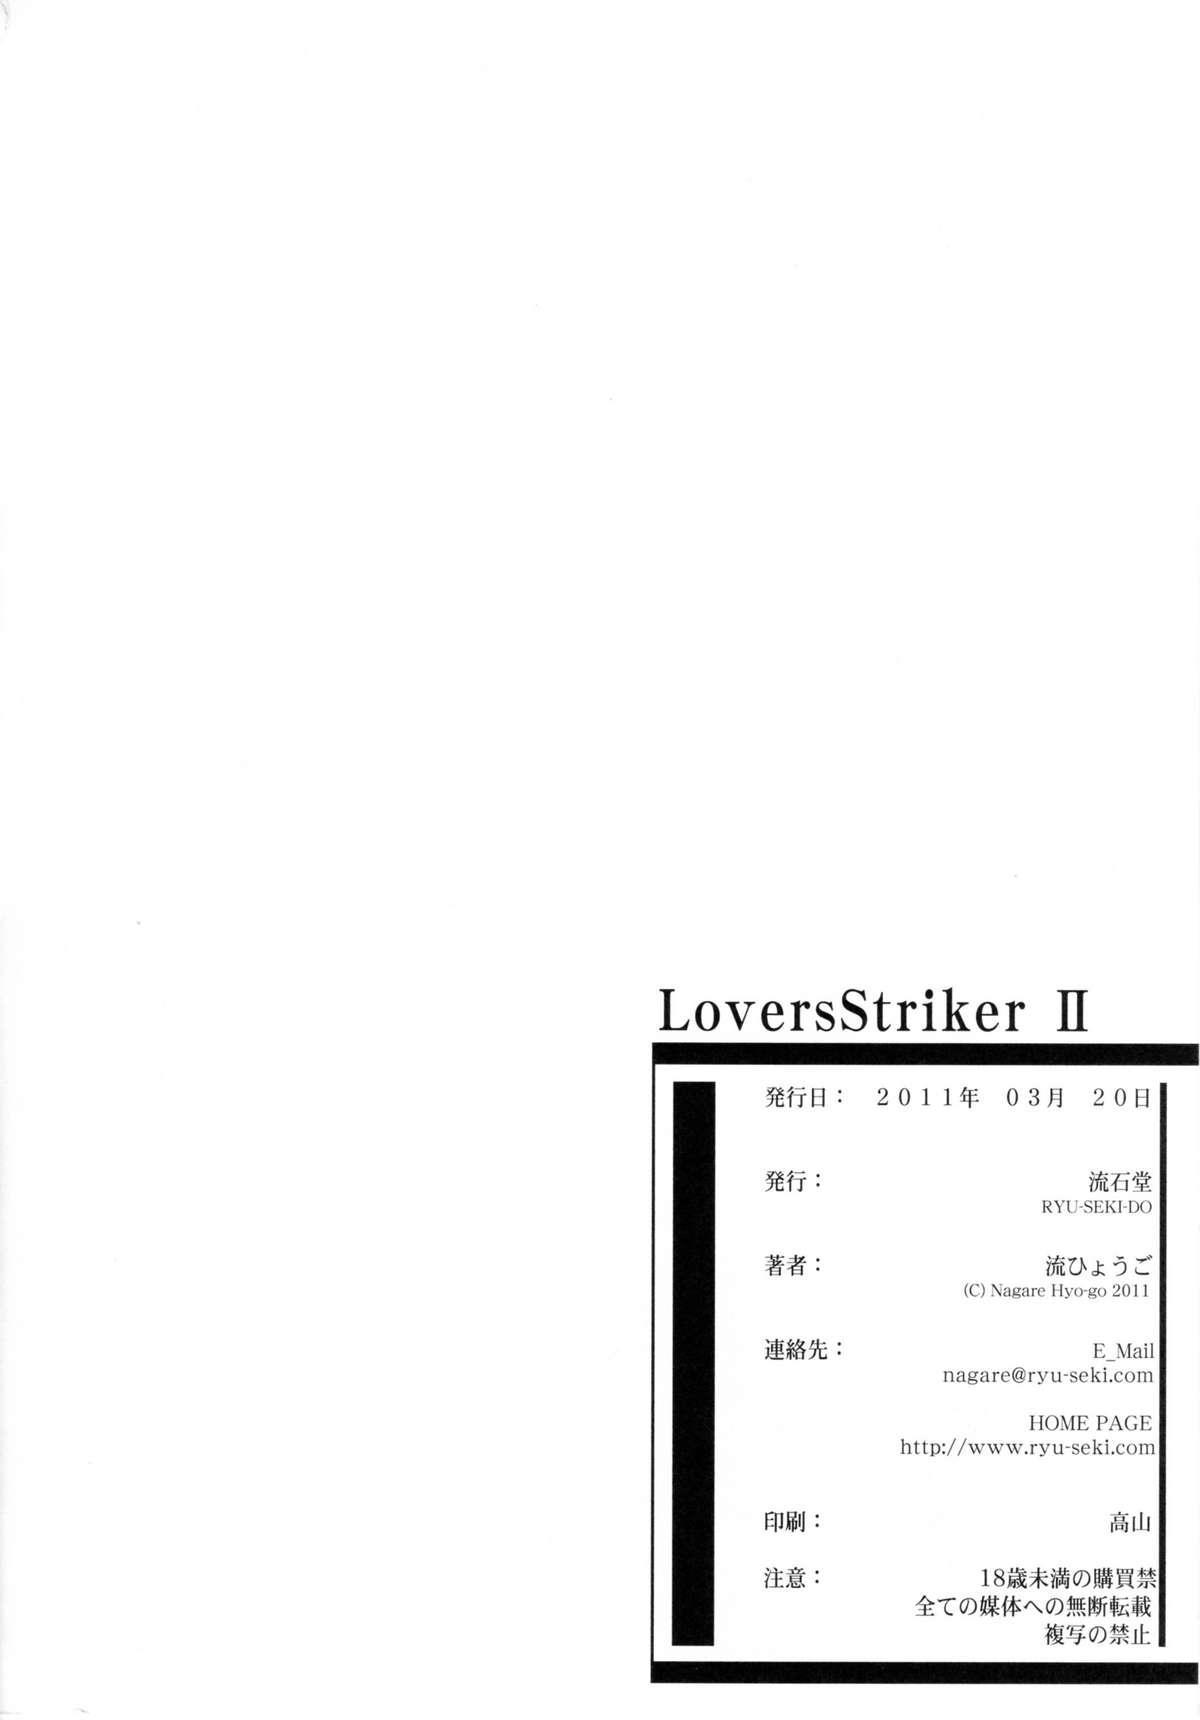 LS Lovers Striker II 24